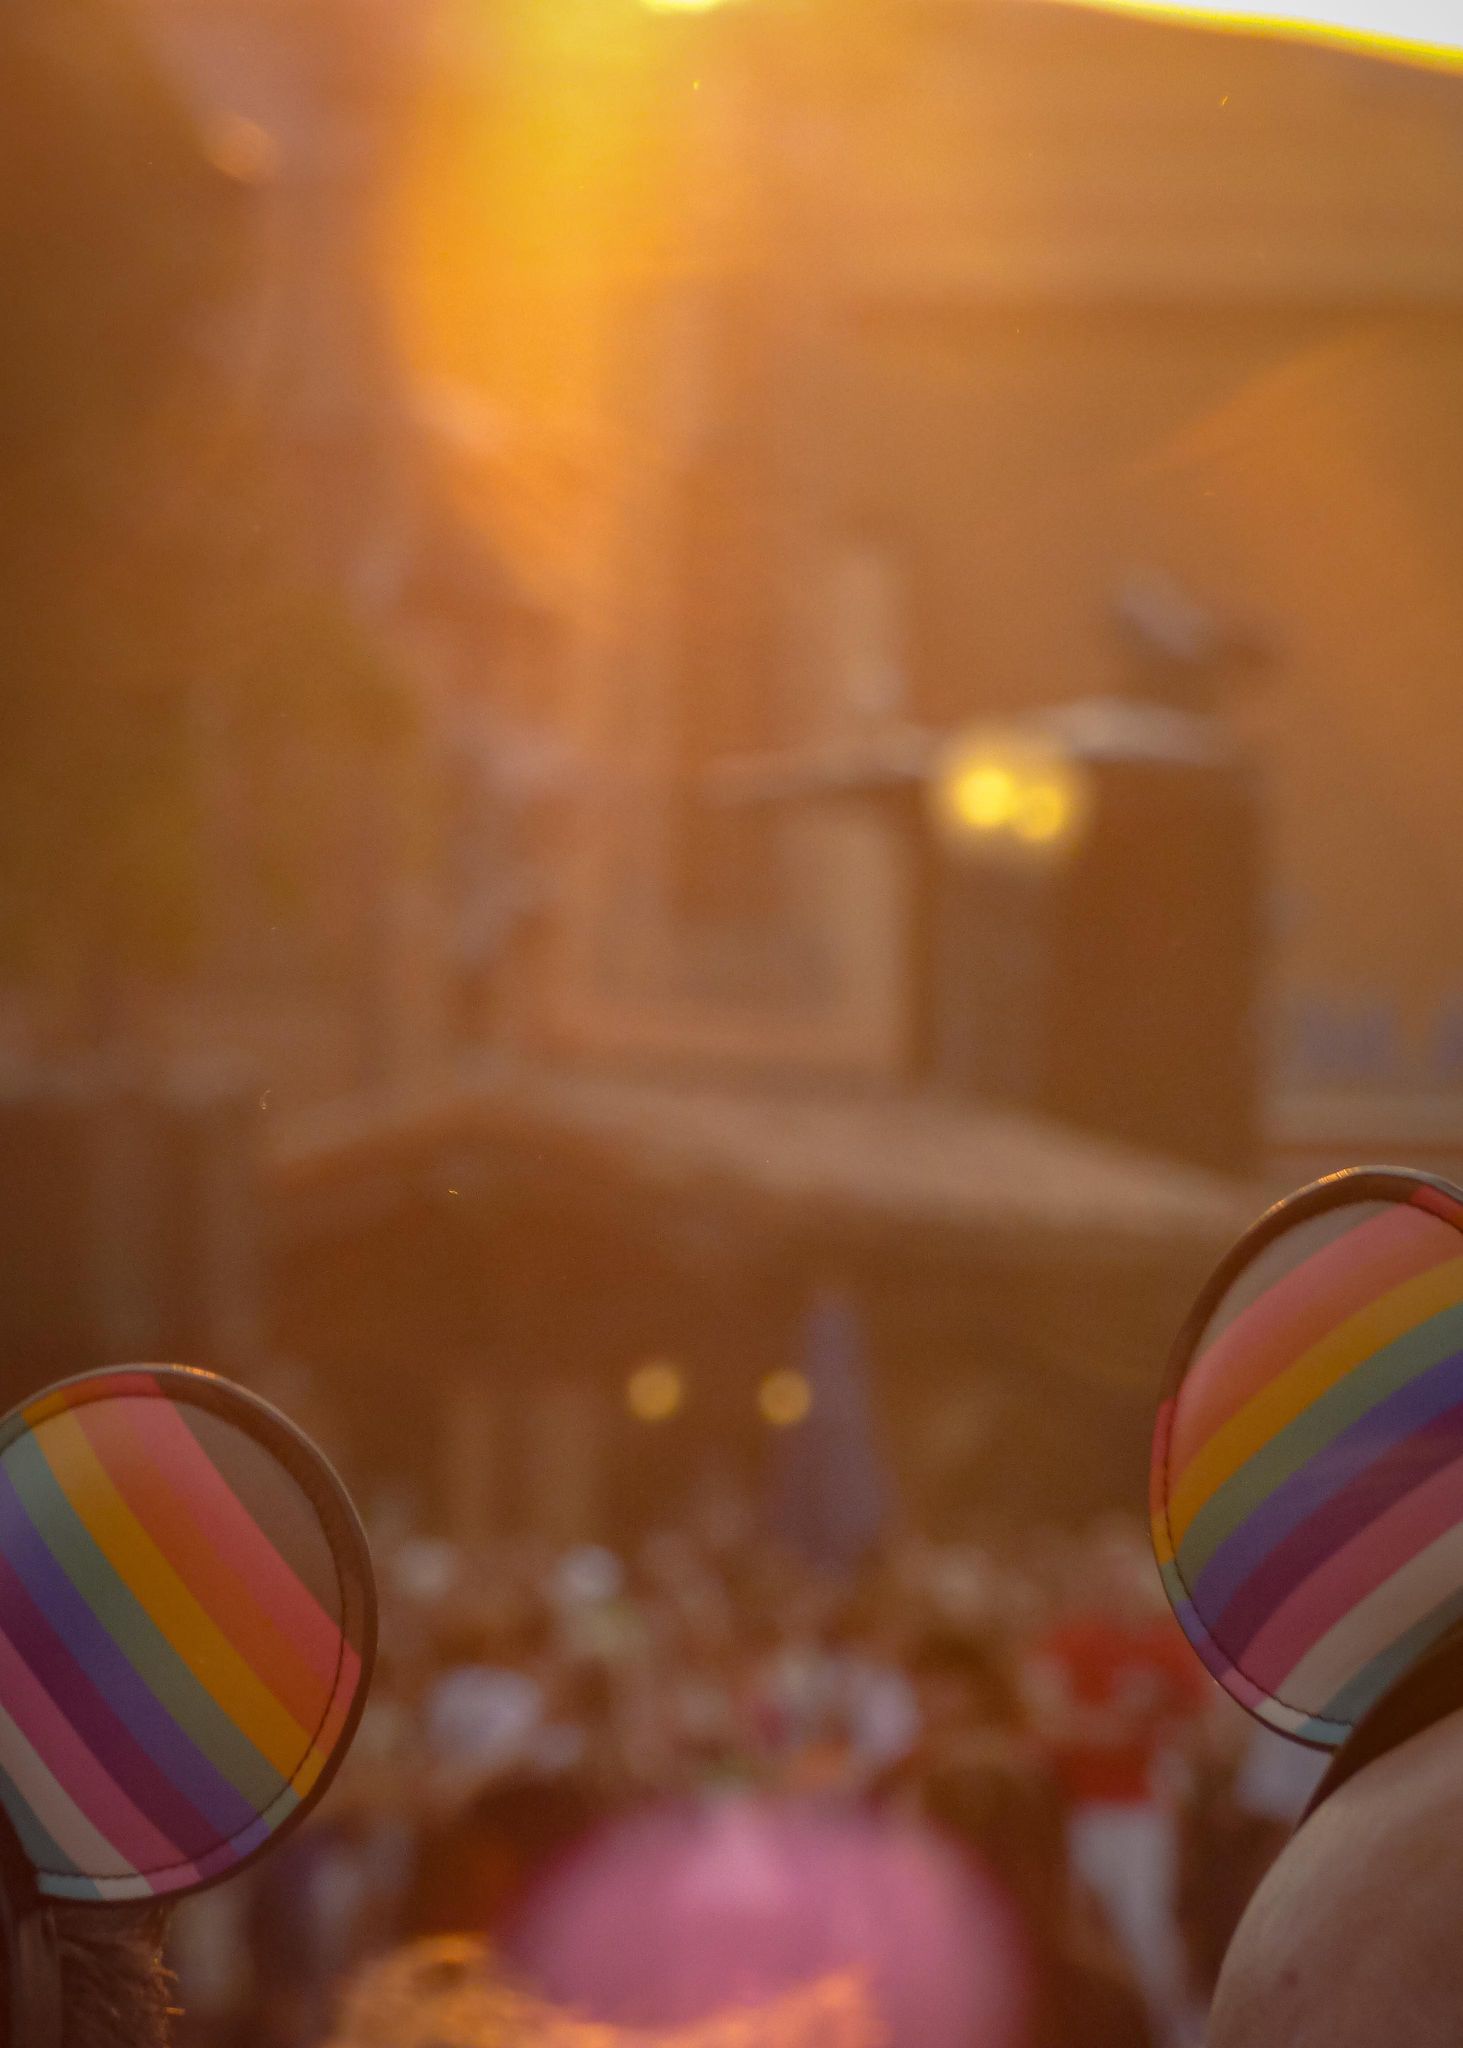 Disneyland Paris Pride opening ceremony 